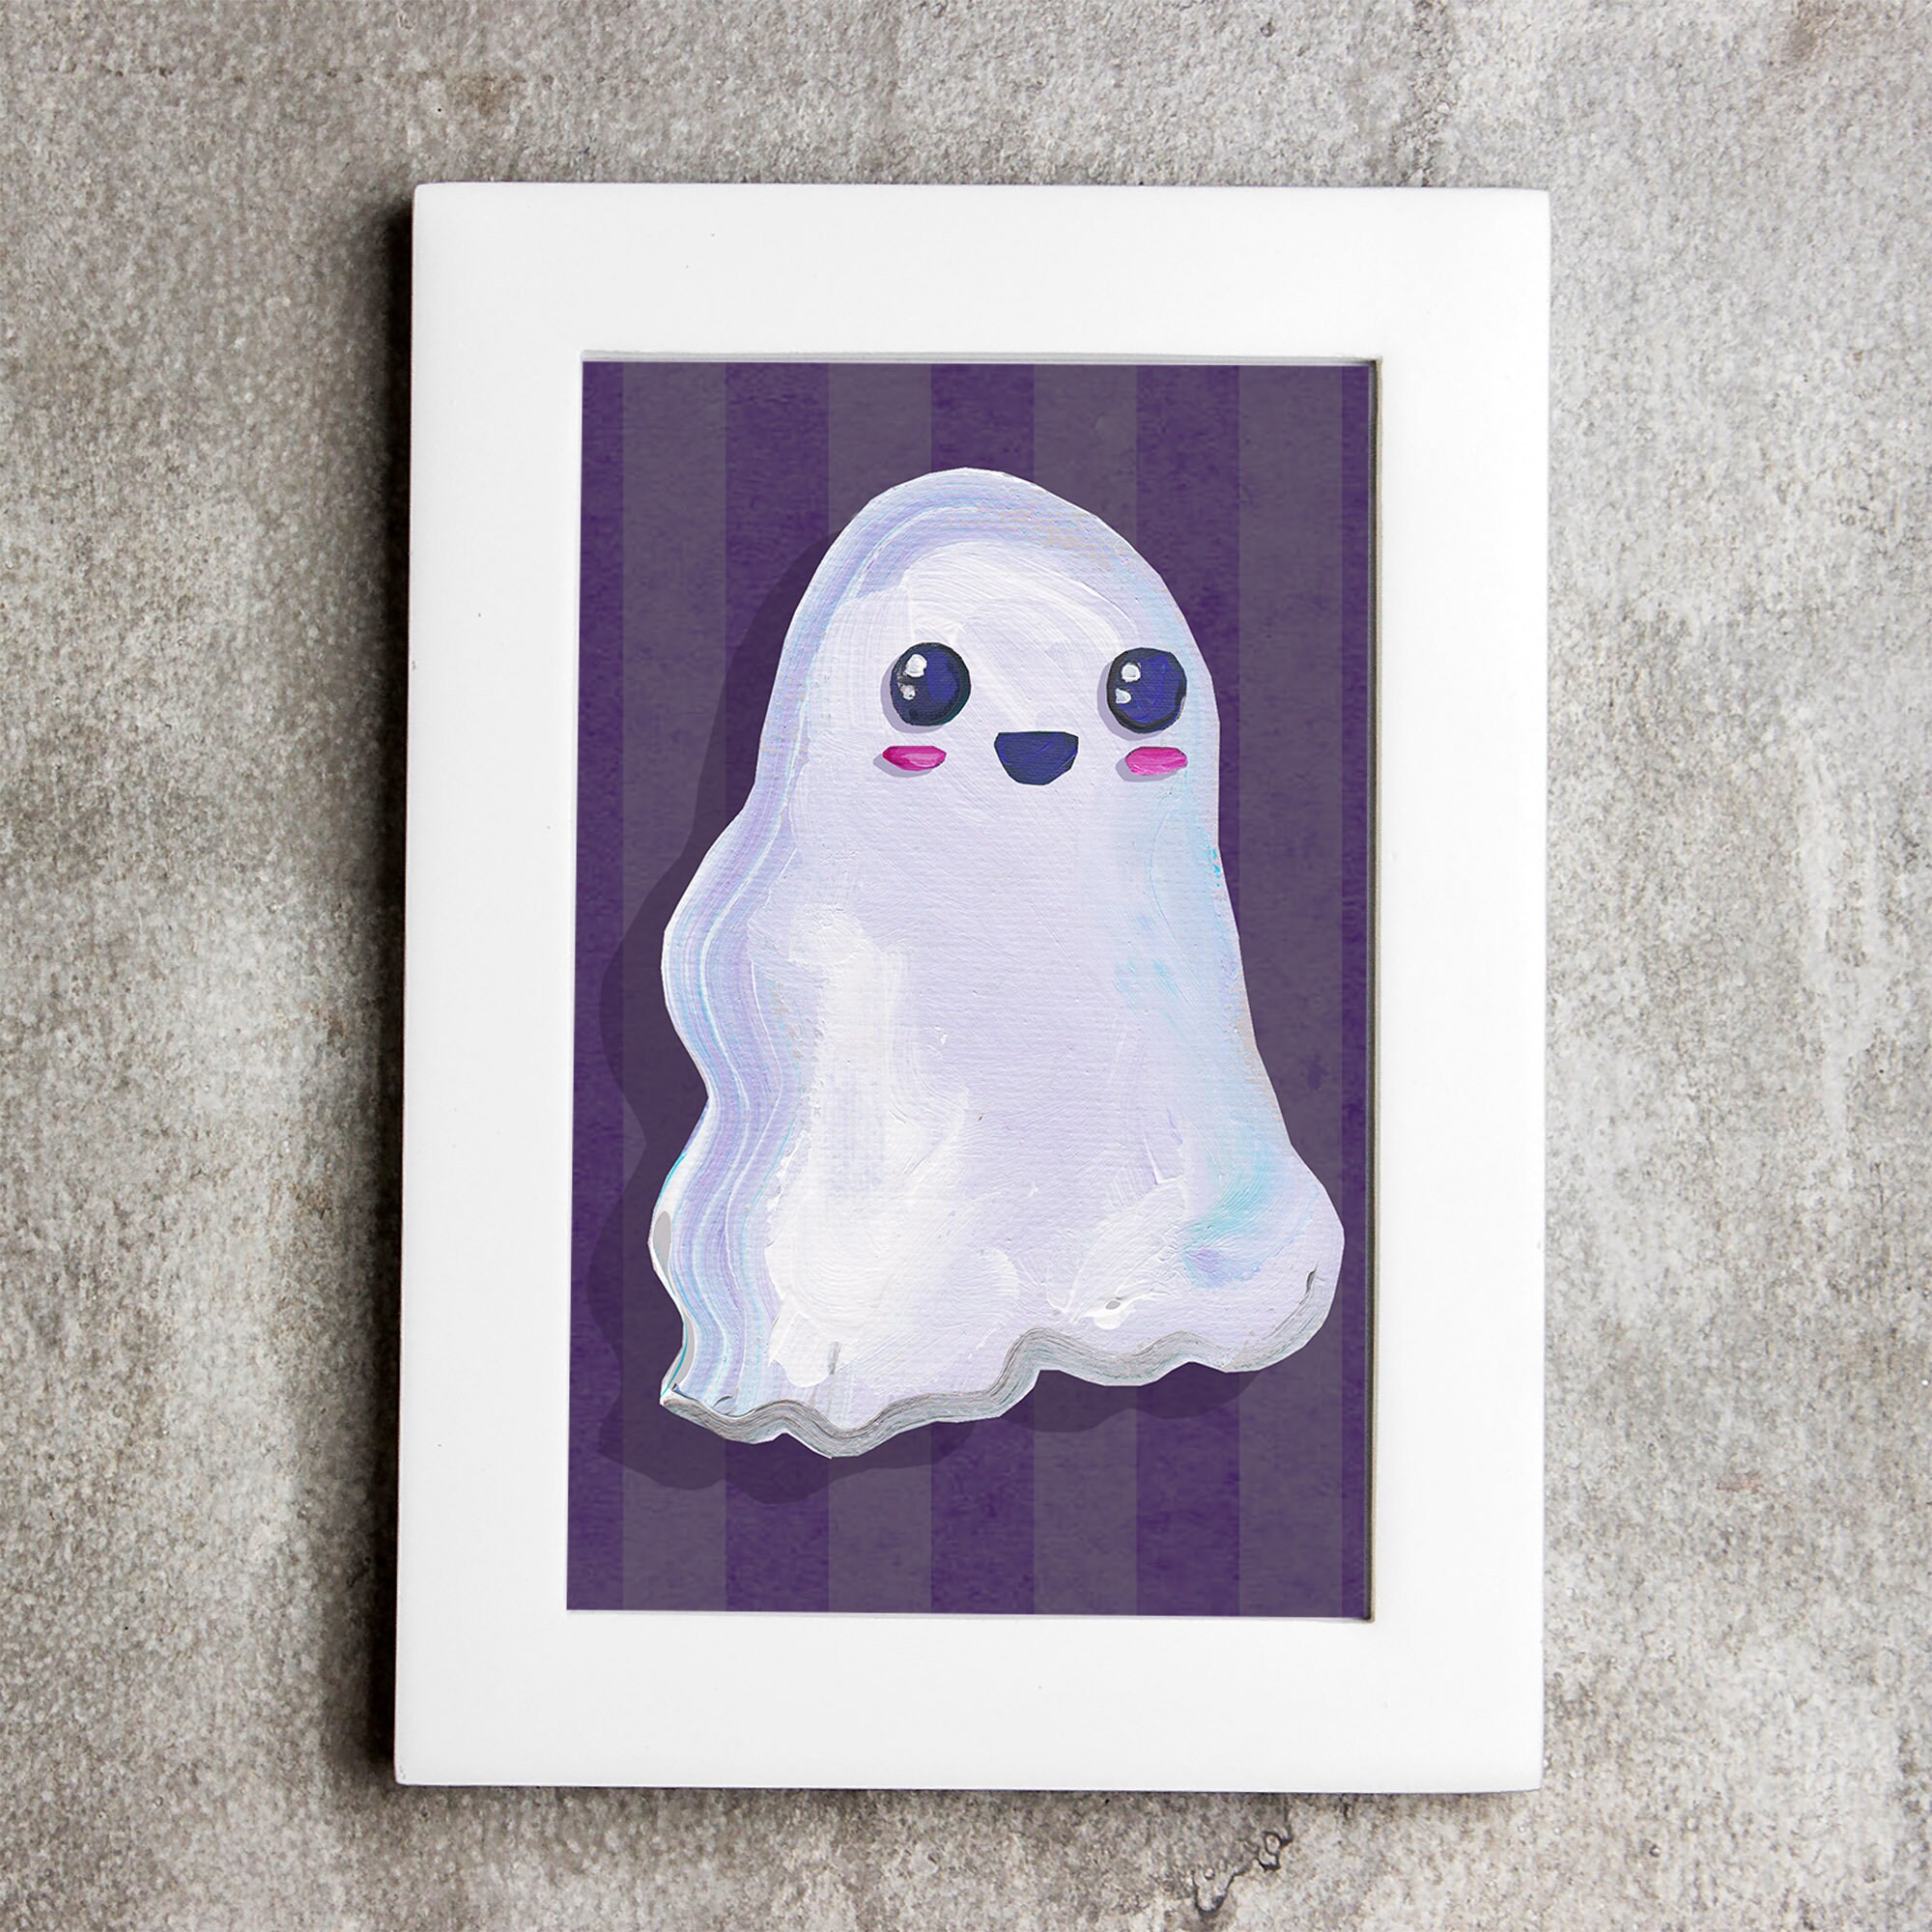 Kawaii Ghost Art Cute Ghost Art Ghost Prints Goth Wall | Etsy